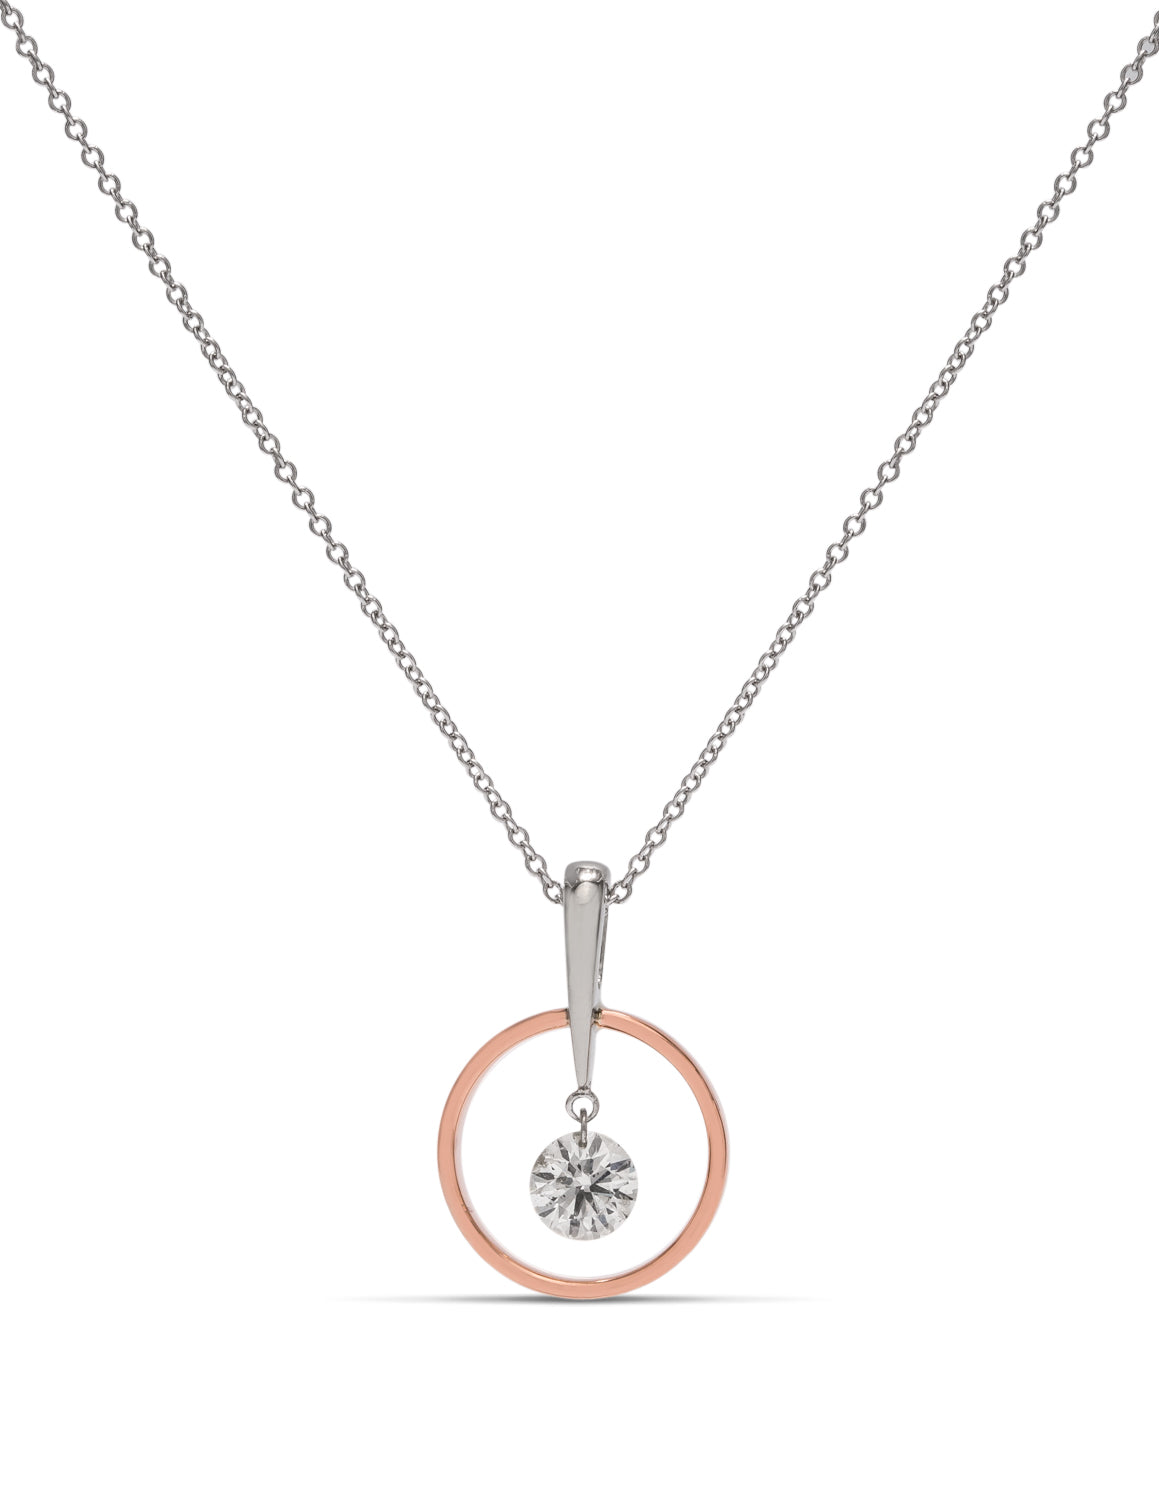 Dancing Diamond Pendant Necklace 14K White Gold